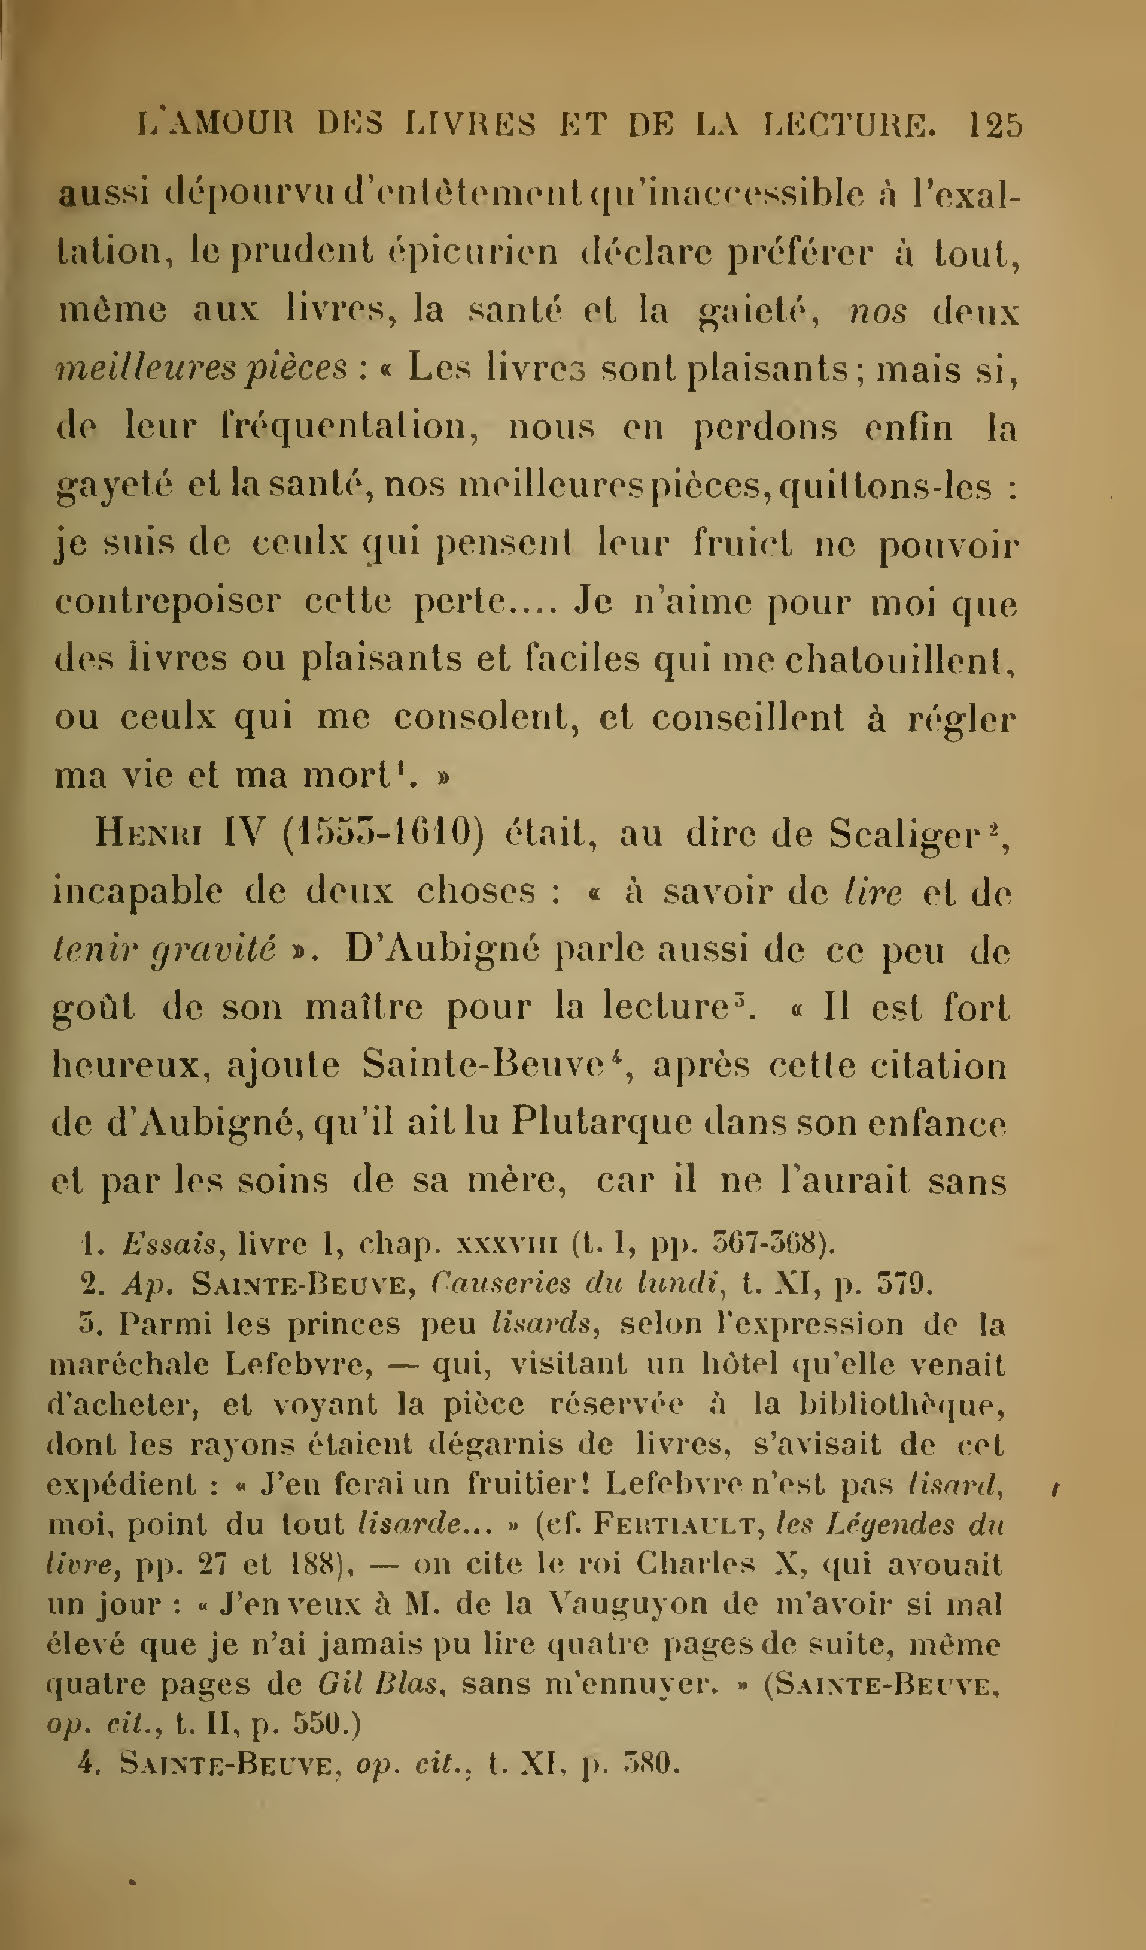 Albert Cim, Le Livre, t. I, p. 125.